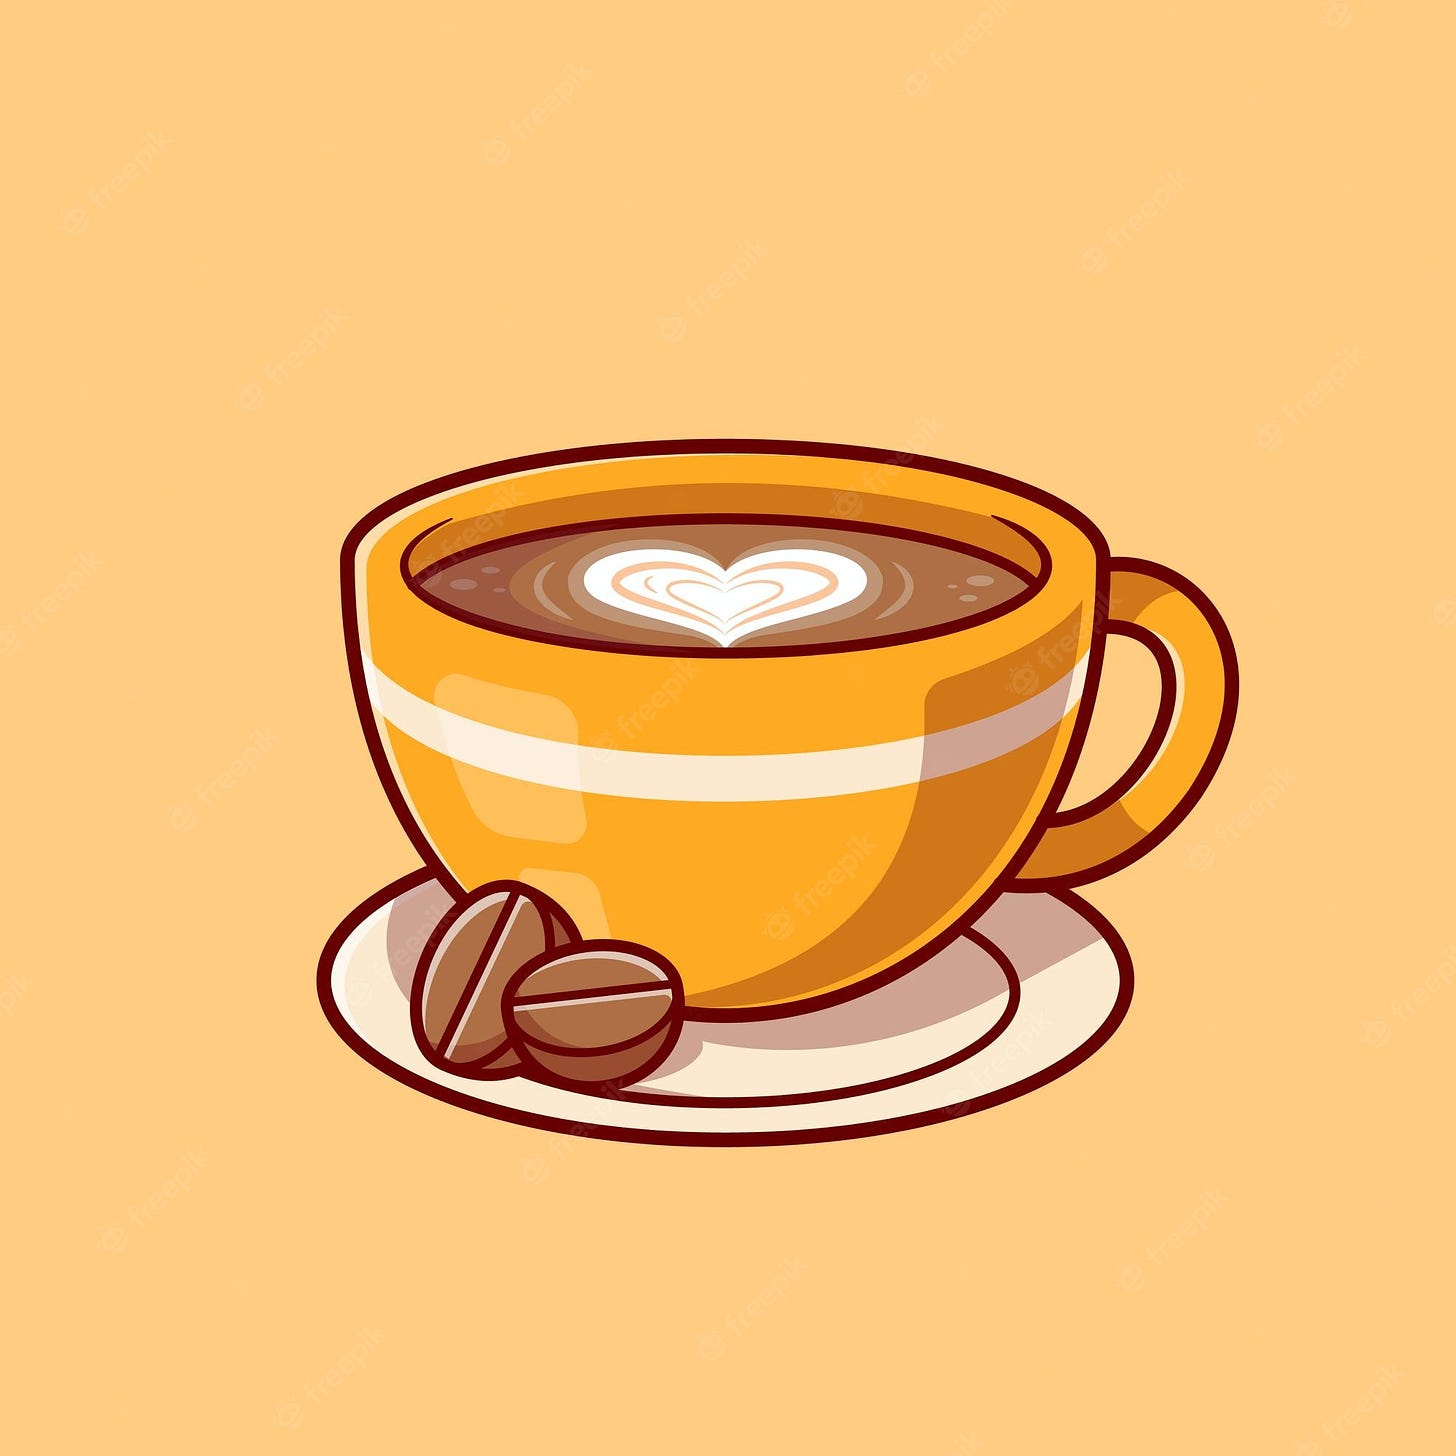 Coffee Illustration Images - Free Download on Freepik